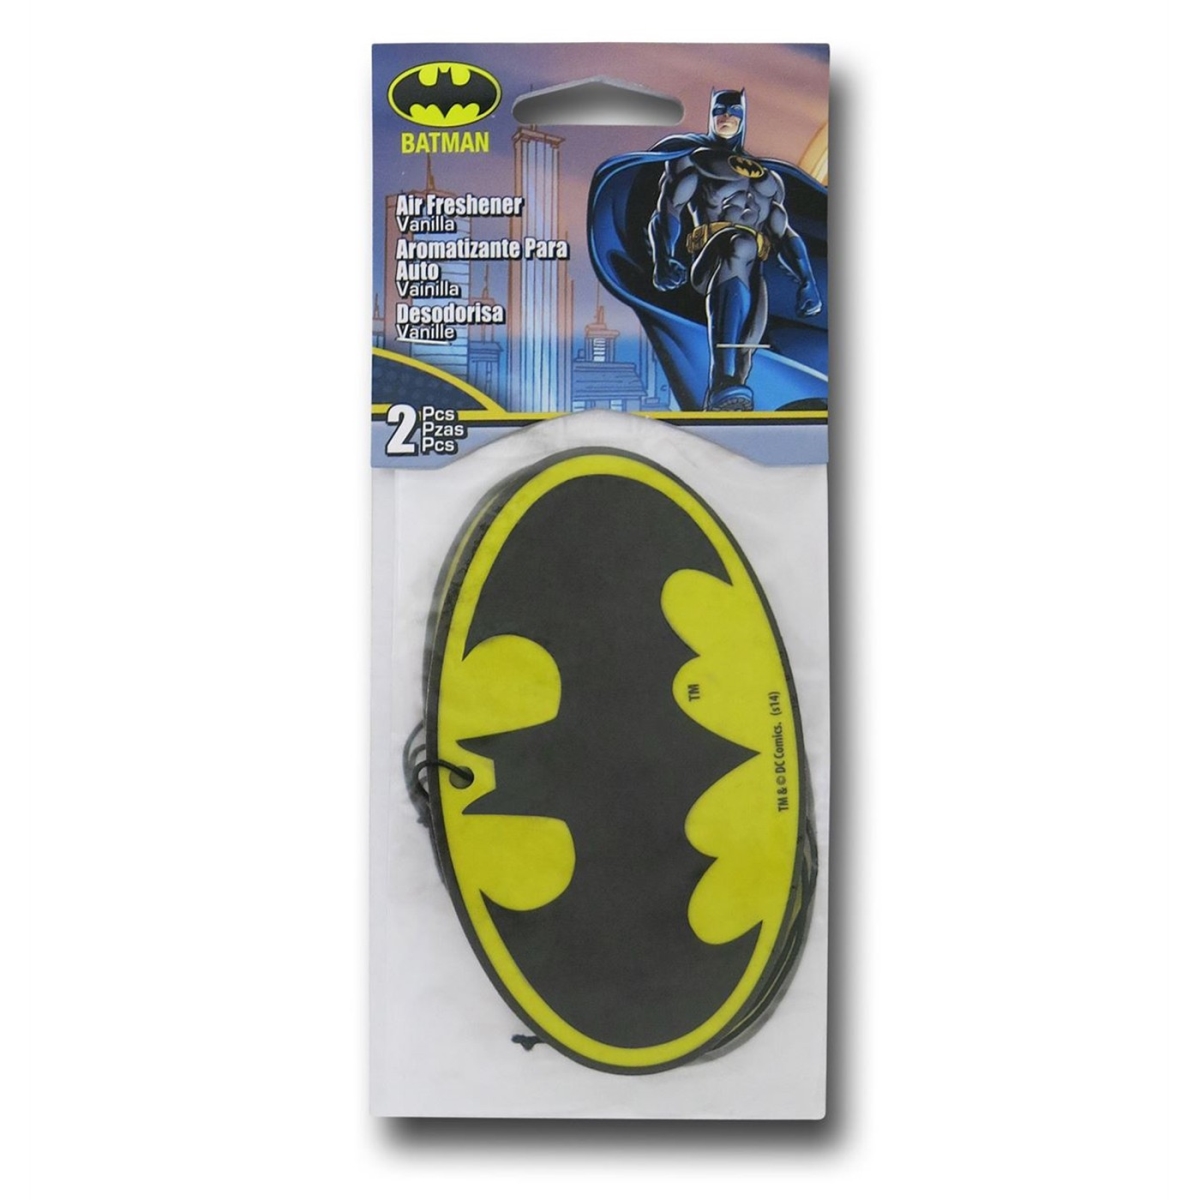 Picture of Batman airfreshbat Batman Air Freshener - Pack of 2